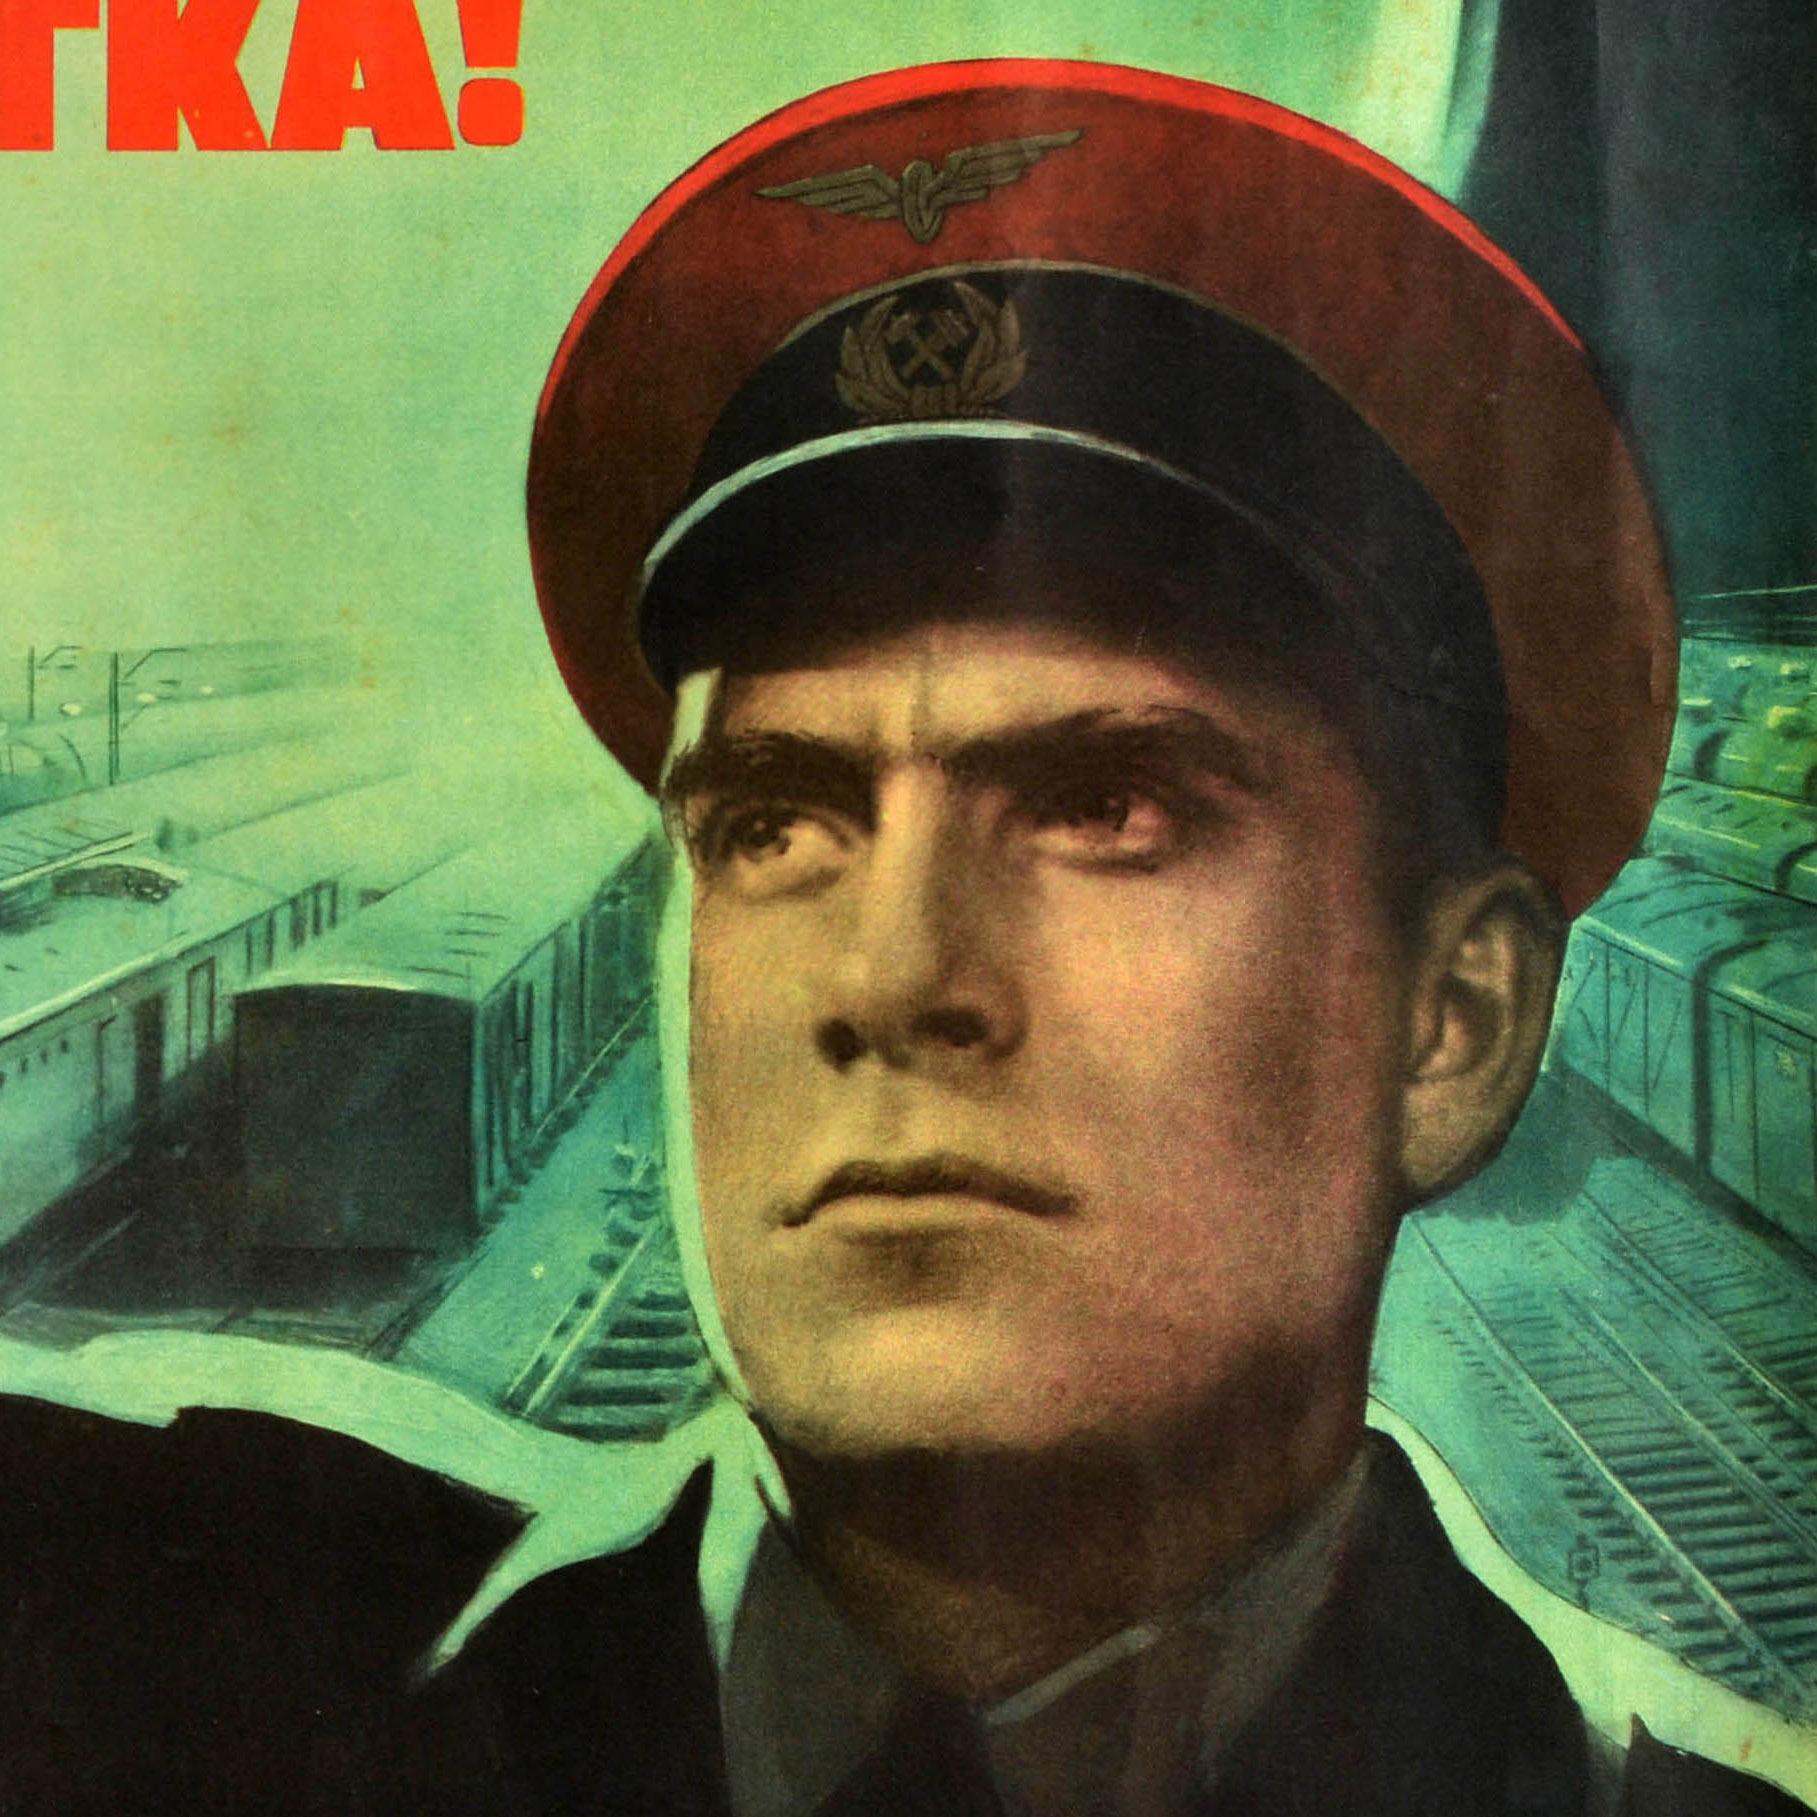 Original Vintage Soviet Propaganda Poster Five Year Plan Rail Freight Turnover - Print by Viktor Koretsky 